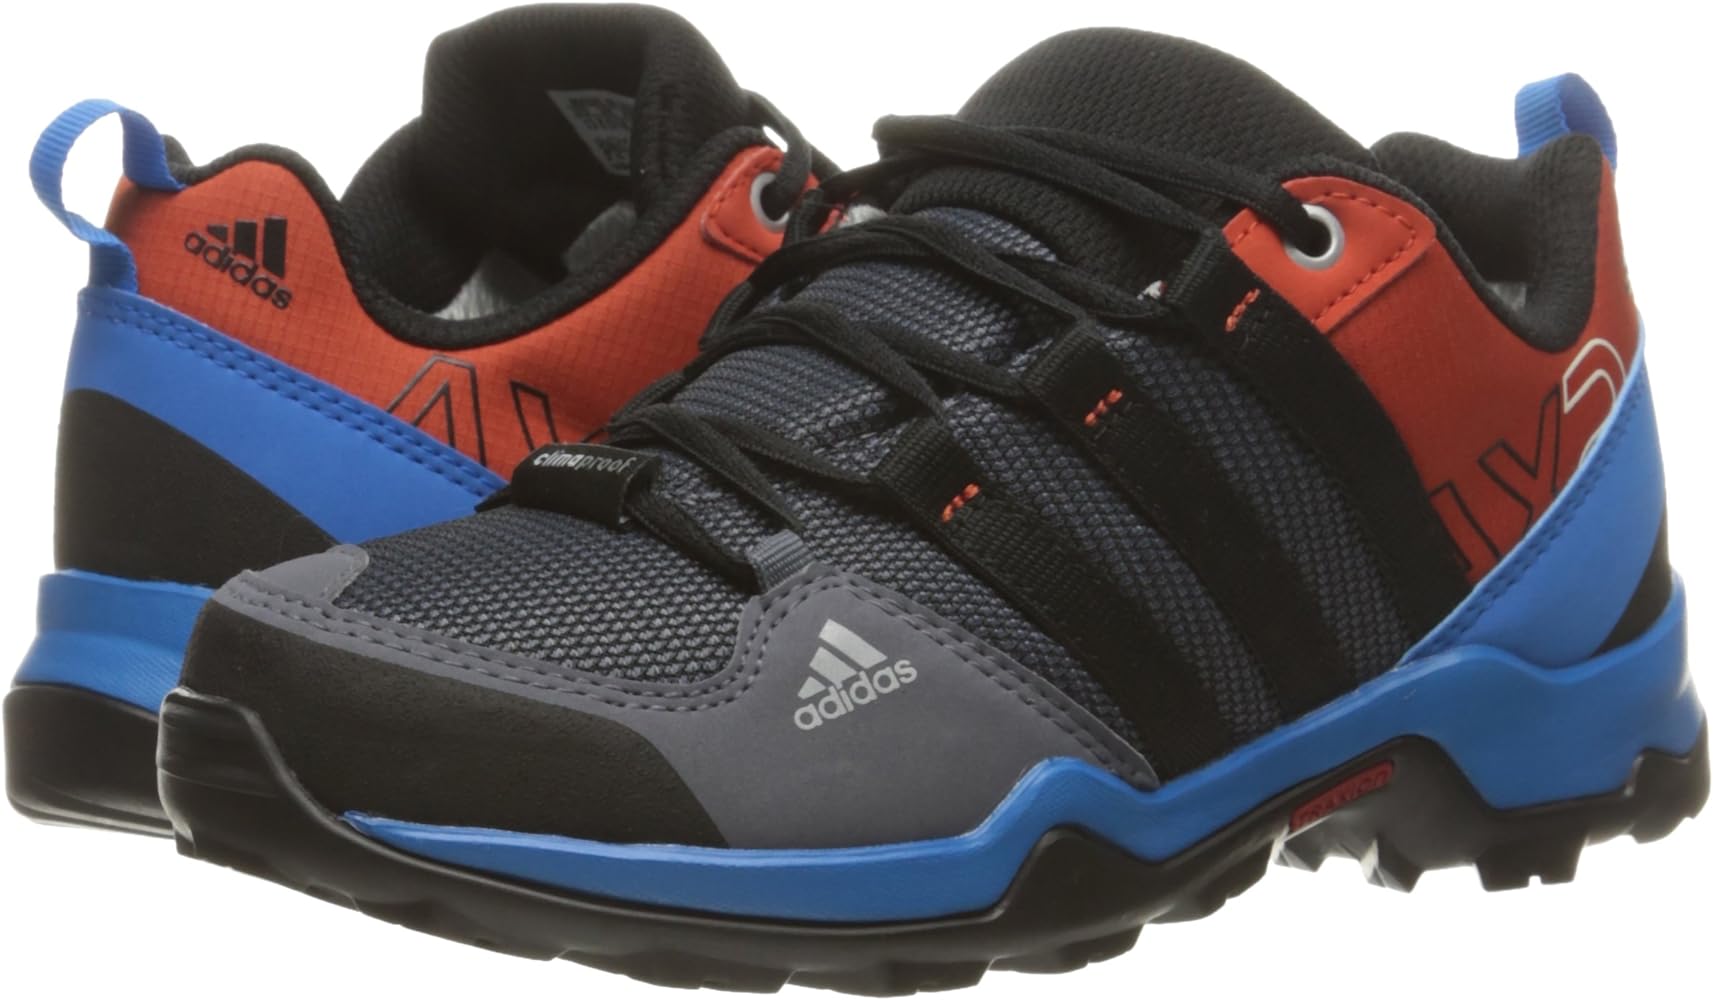  Adidas Outdoor AX2 Hiking Shoe